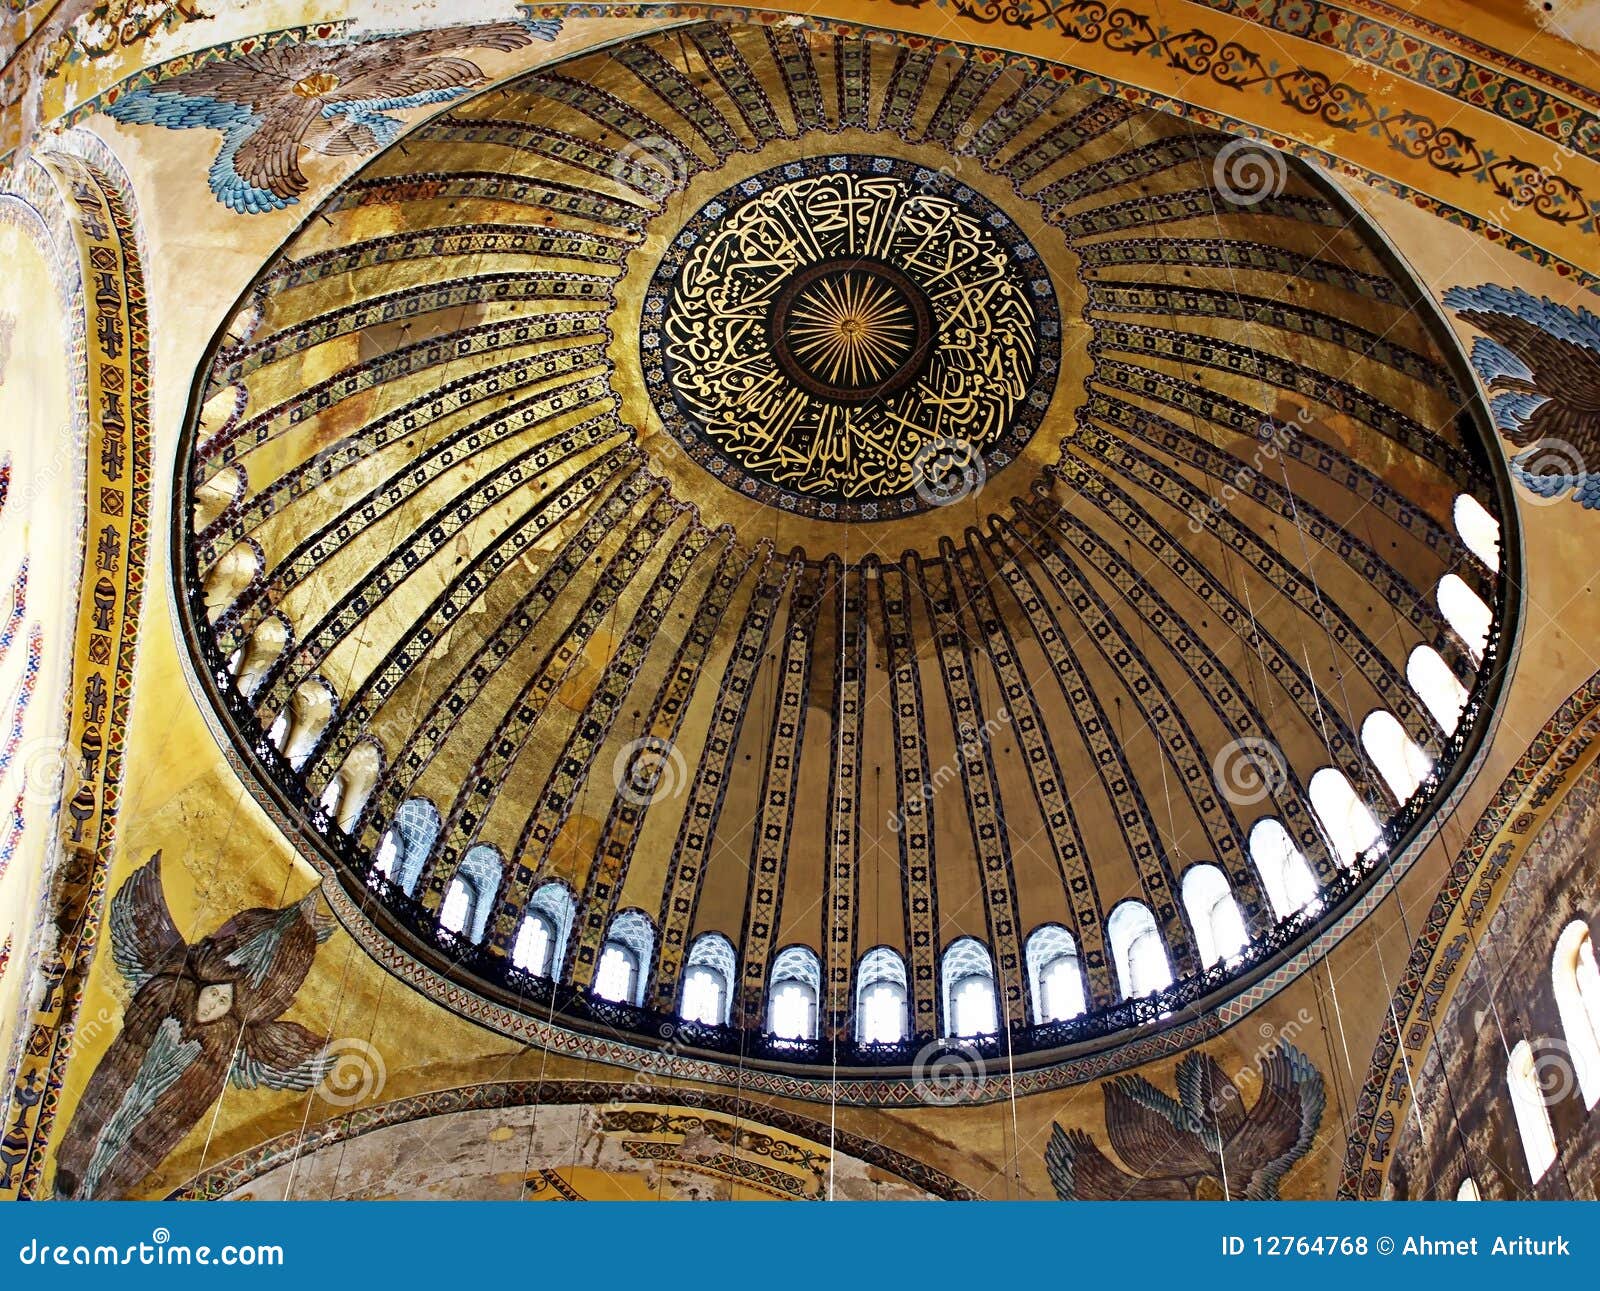 Dome Of Hagia Sophia Royalty Free Stock Photos - Image: 12764768